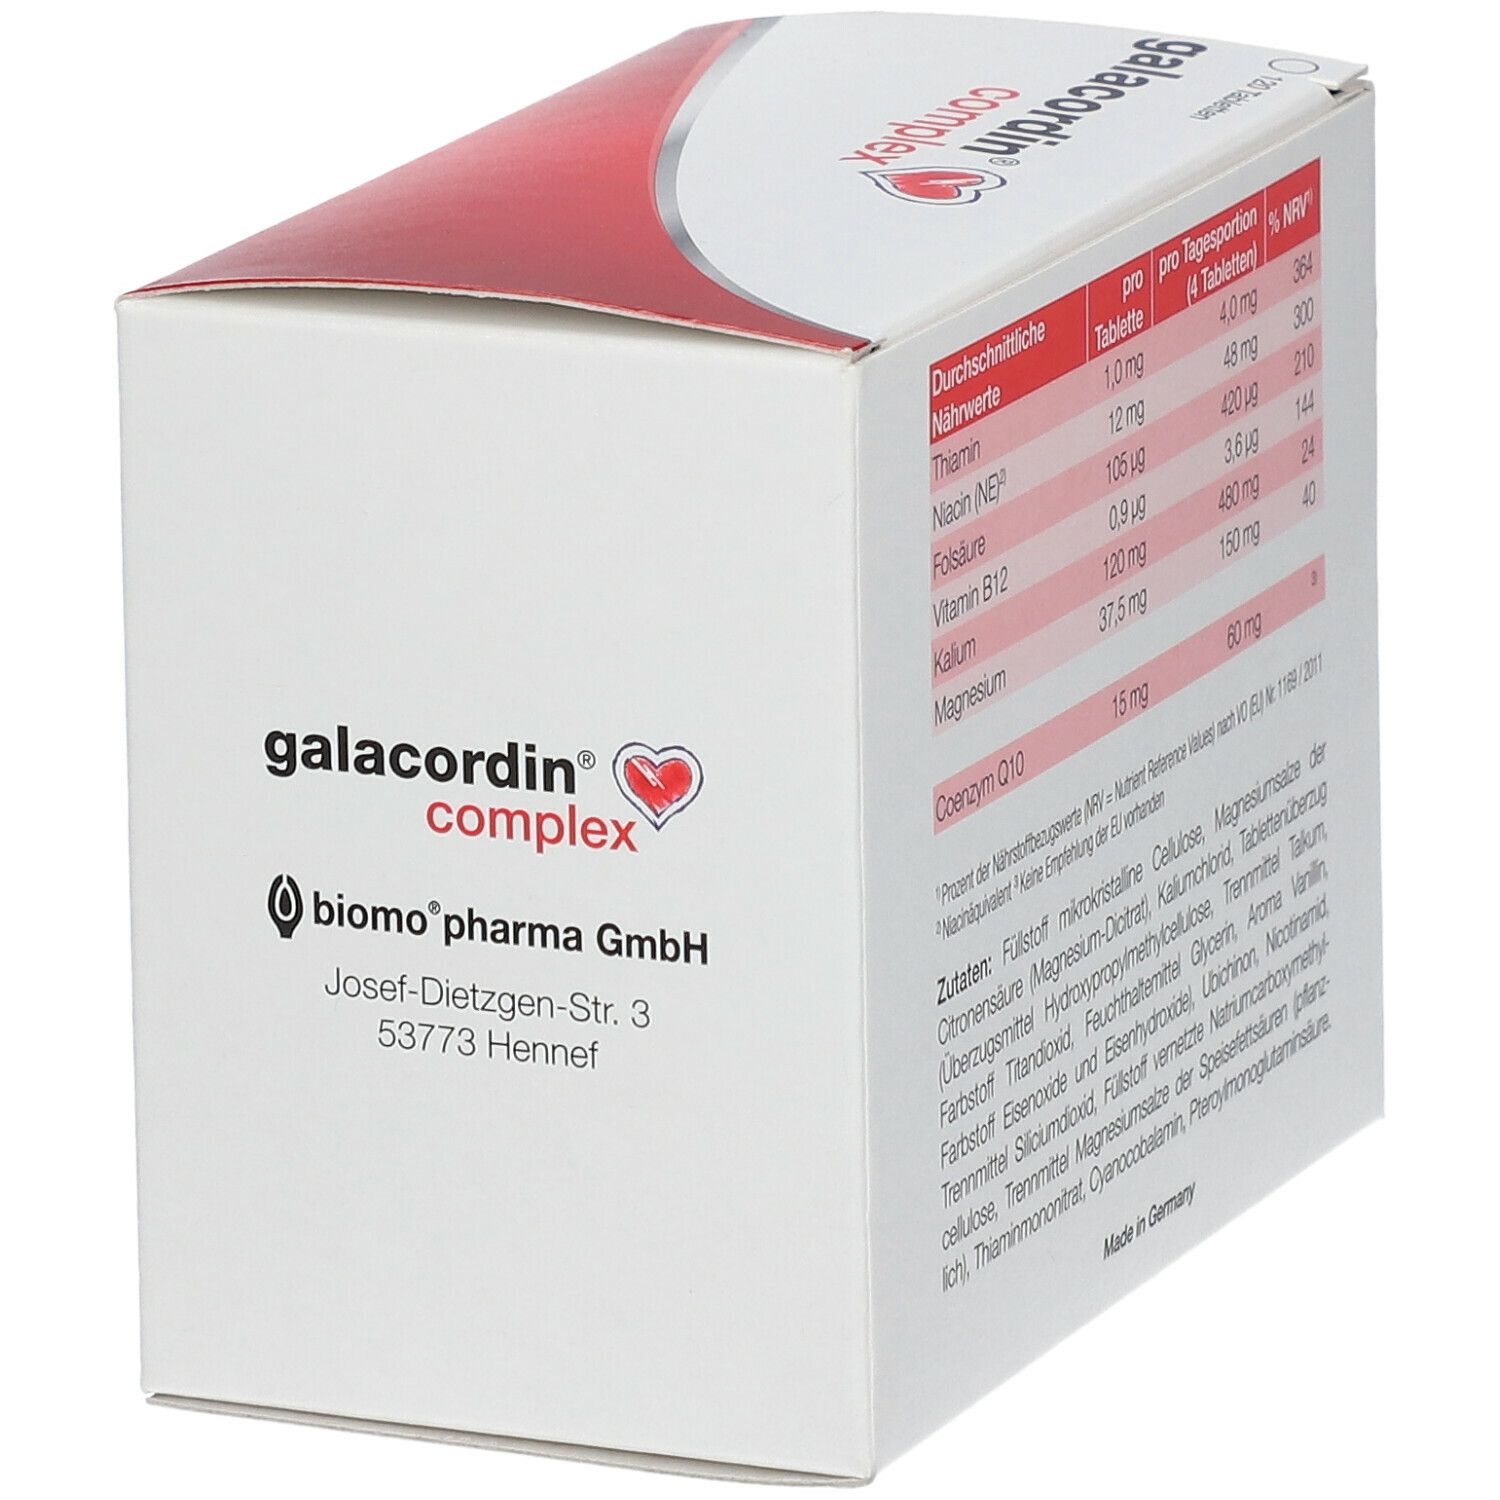 Galacordin® complex